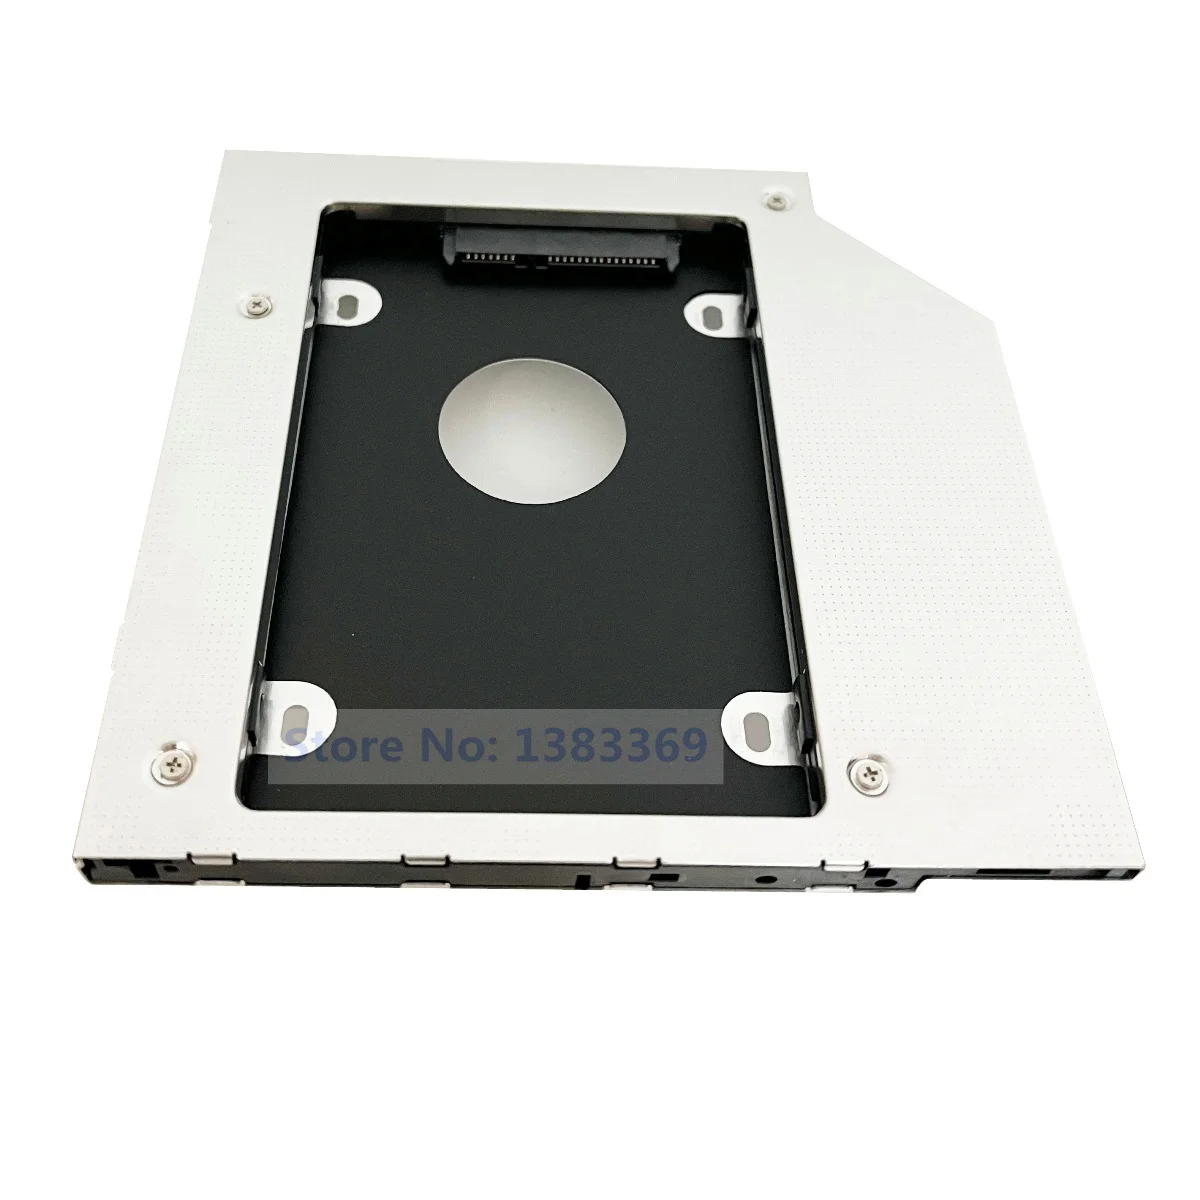 

NIGUDEYANG 2nd HDD SSD Hard Drive SATA Frame Caddy Adapter for Dell Inspiron 15 5000 5565 5567 5748 5749 17 7000 DU-8A5LH GU90N